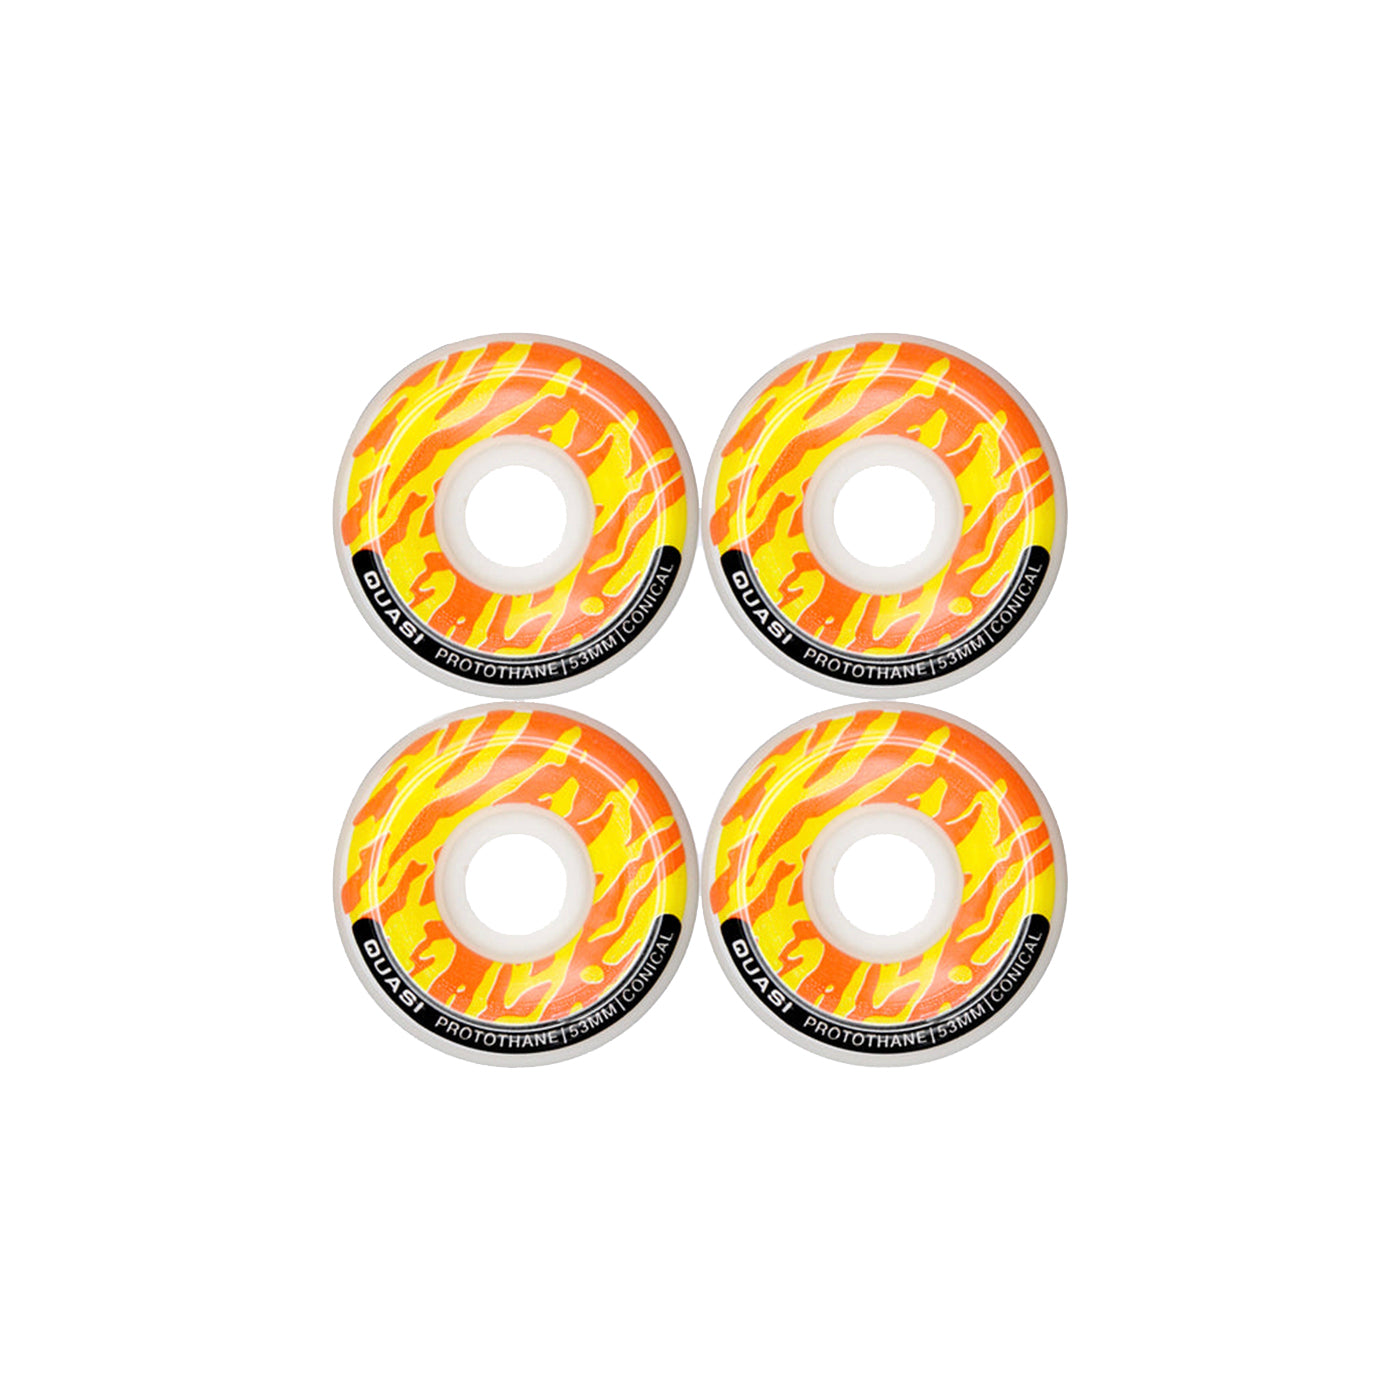 Quasi Skateboards P-Thane Conical Shape(Yellow/Pink) Wheels 52mm